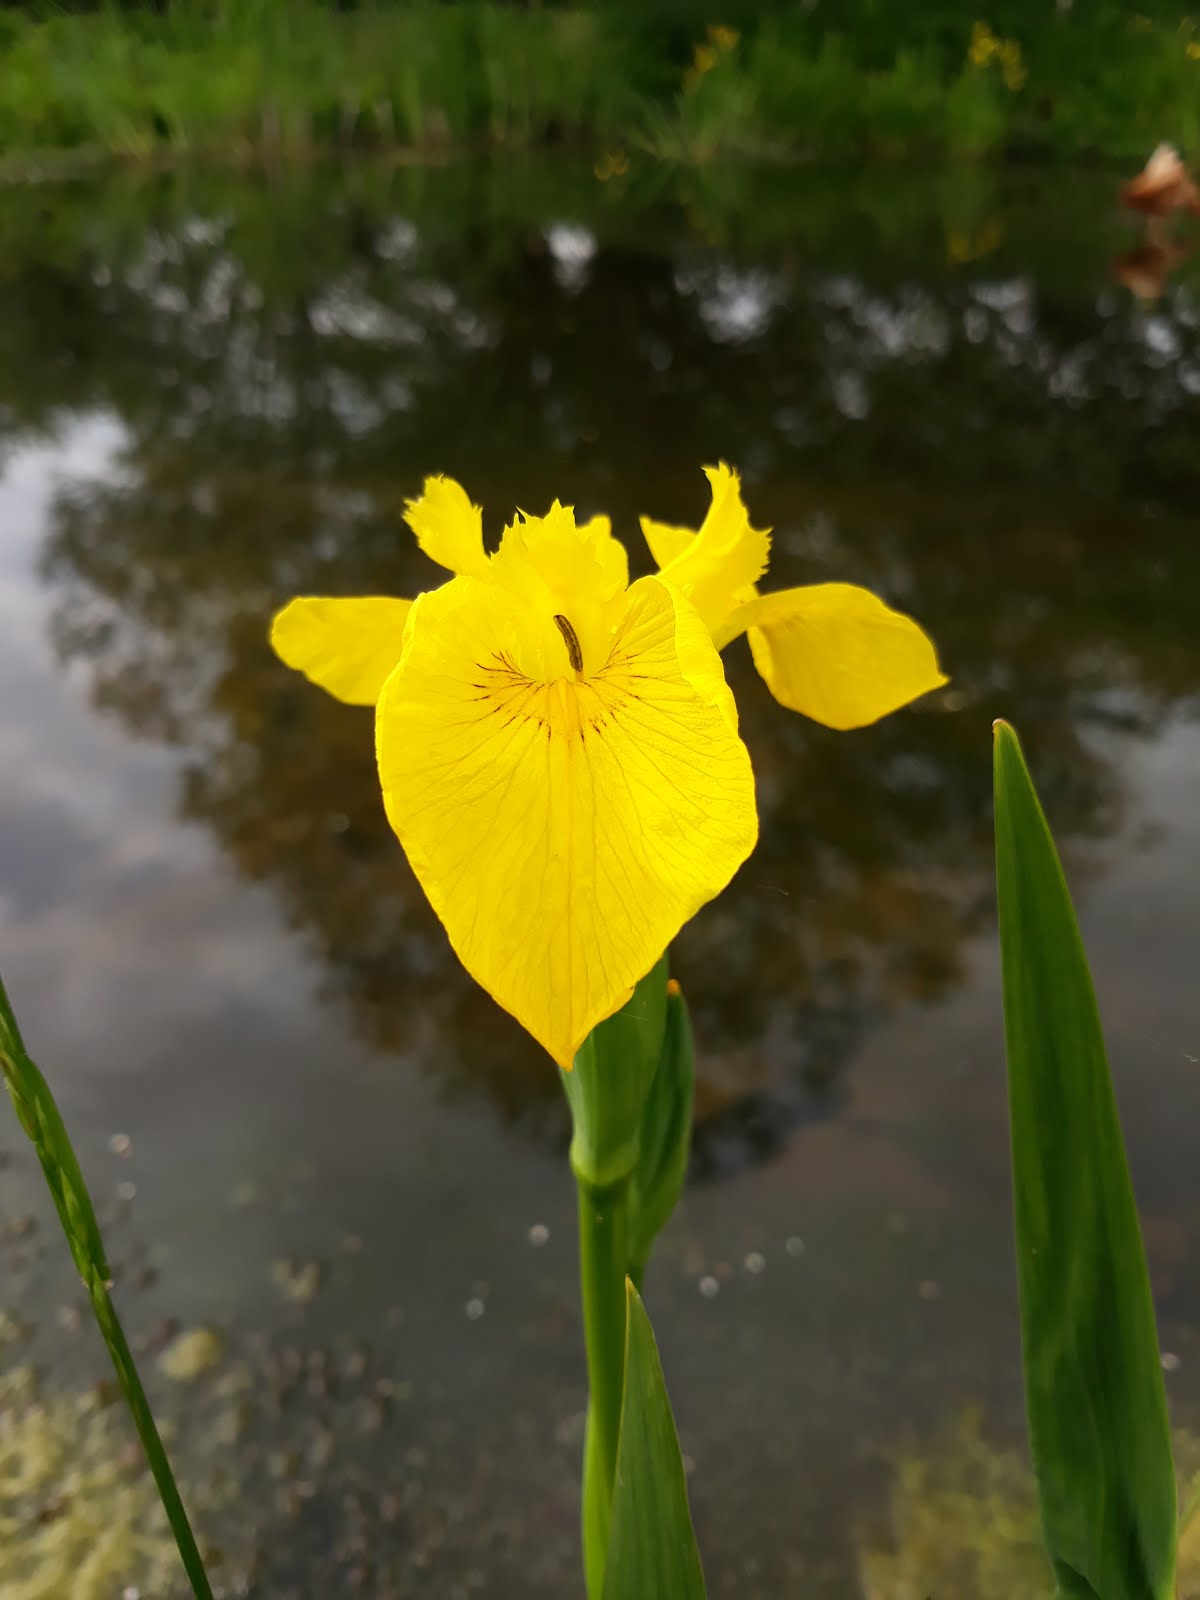 Flag iris are looking spectaular